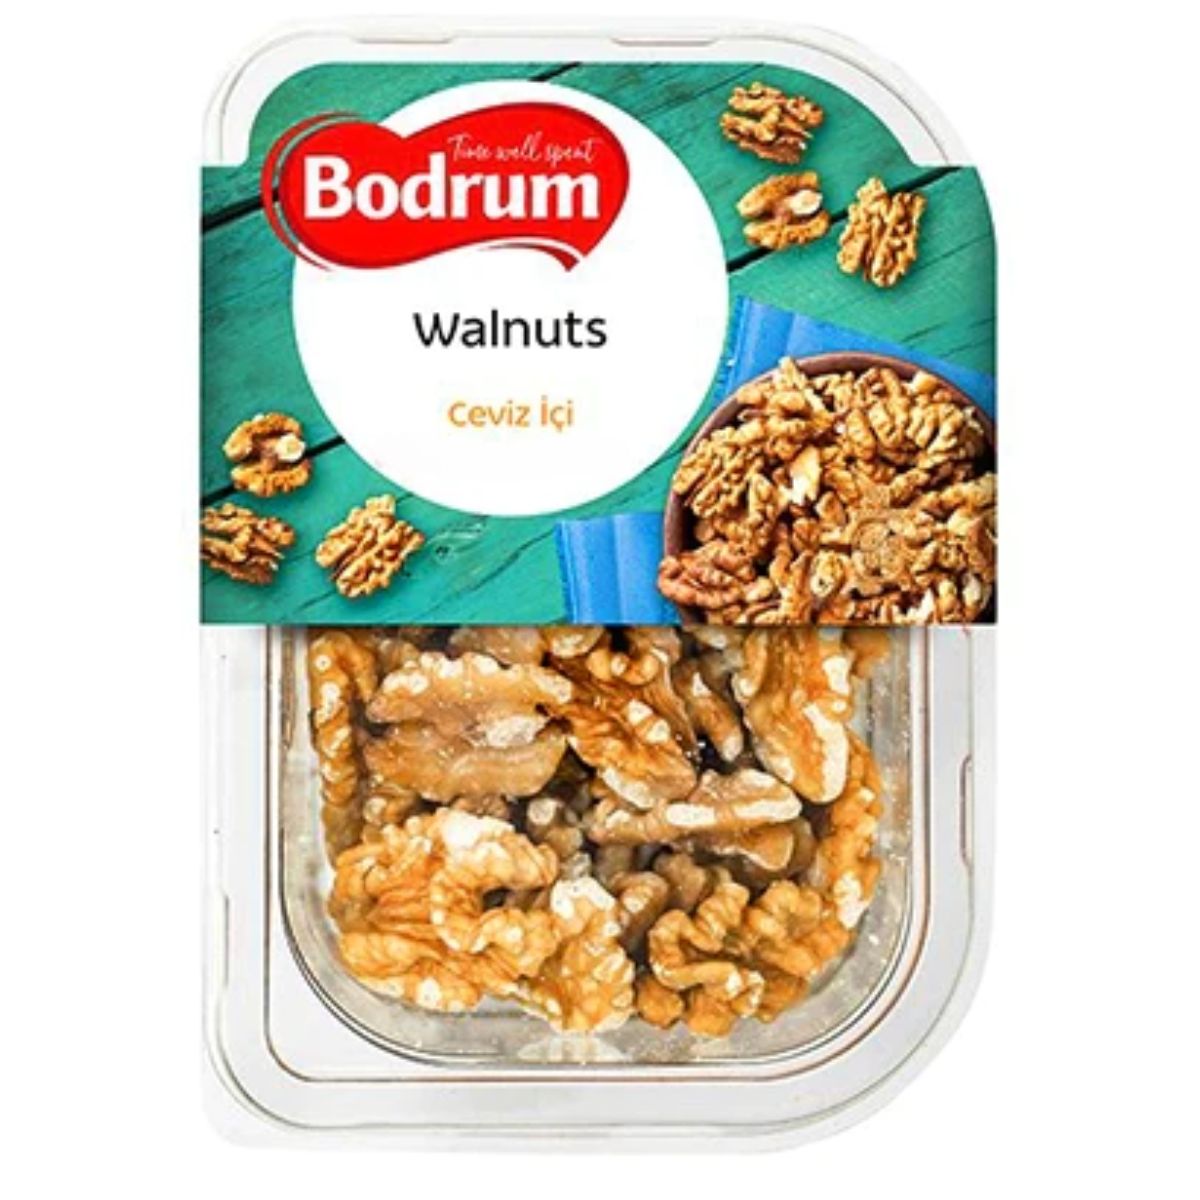 Bodrum - Walnut - 100g walnuts in a plastic container.